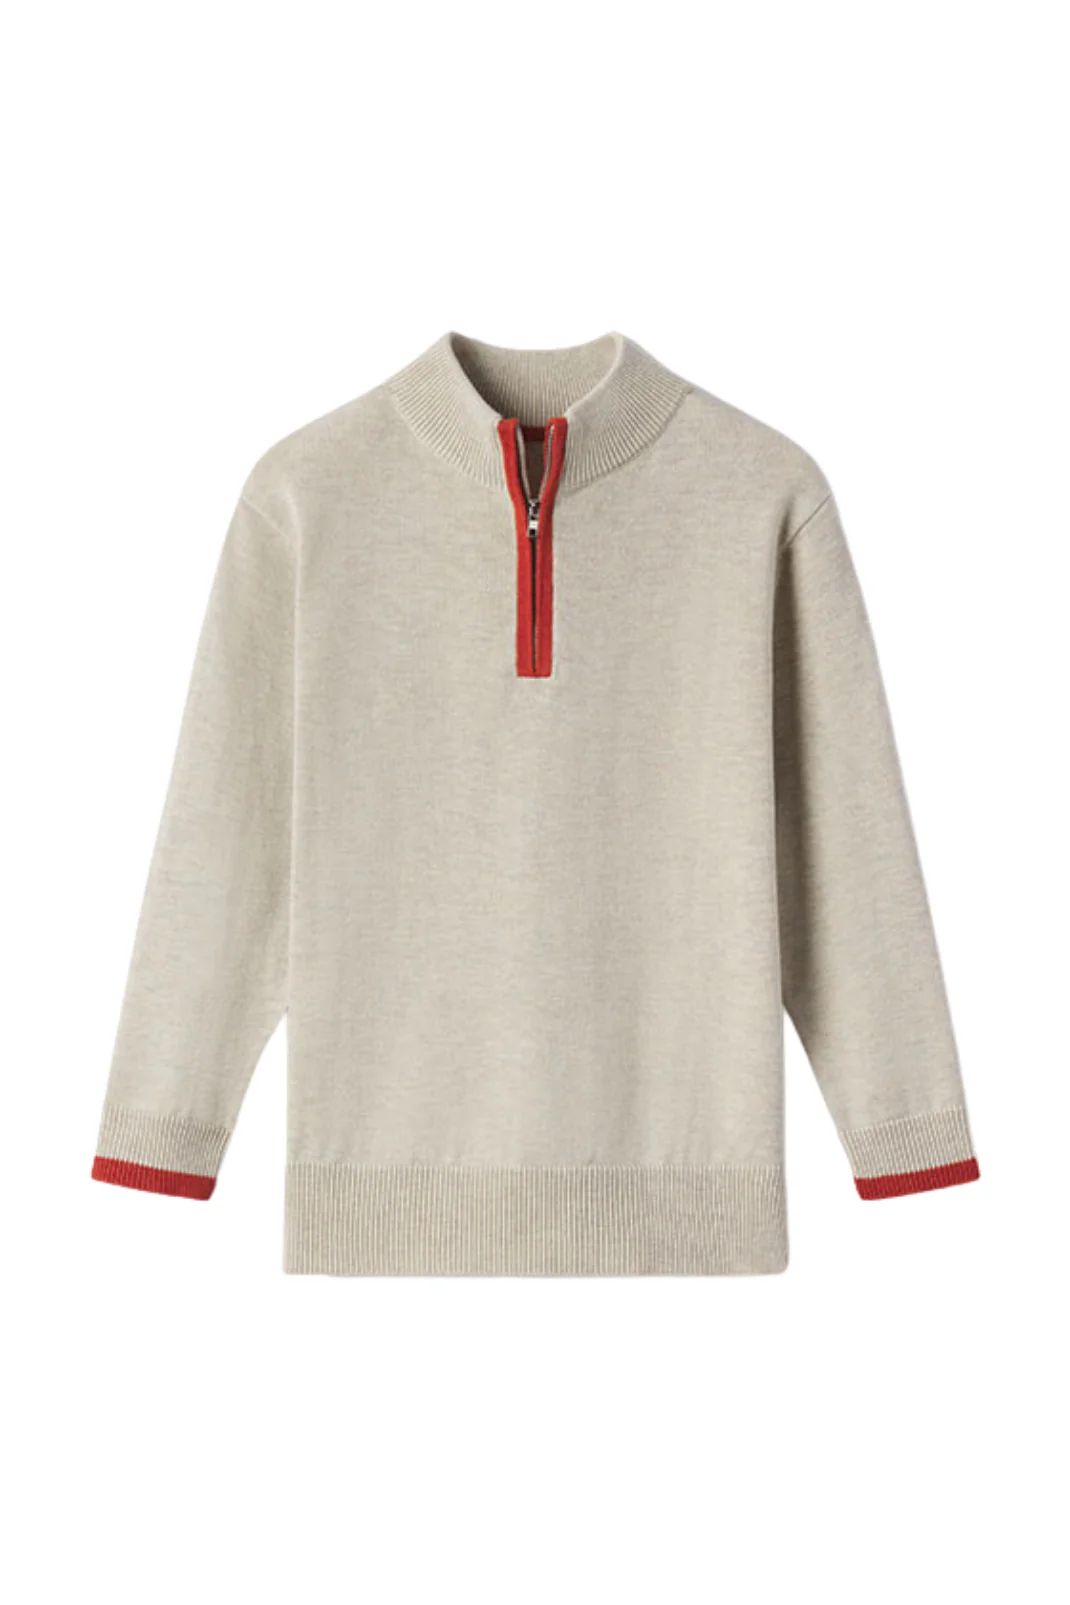 Griffin Sweater in Oatmeal and Chutney | Baybala